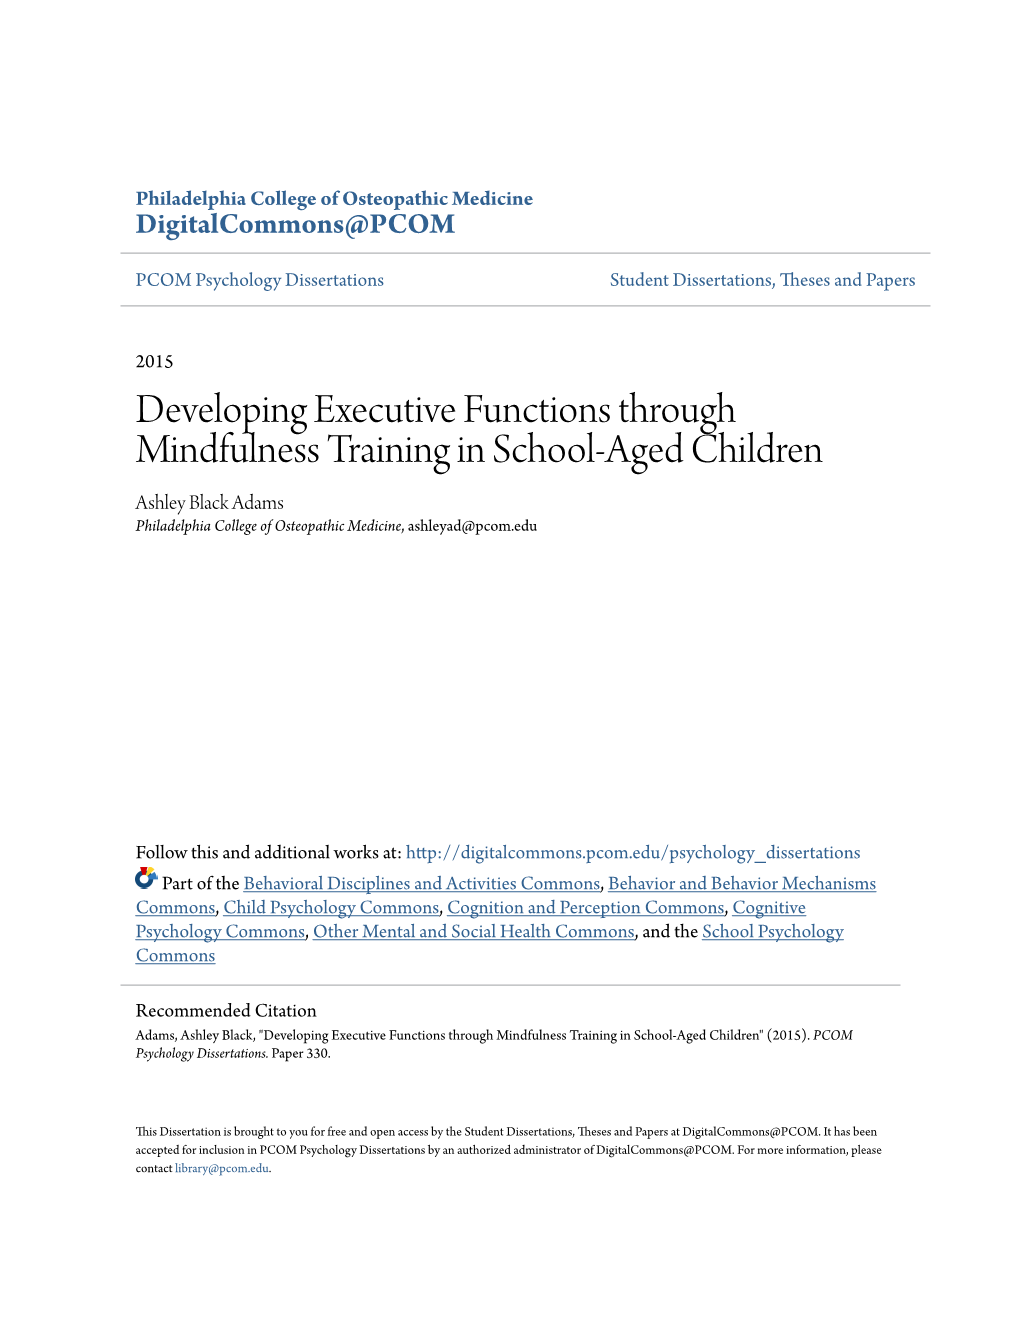 Developing Executive Functions Through Mindfulness Training in School-Aged Children Ashley Black Adams Philadelphia College of Osteopathic Medicine, Ashleyad@Pcom.Edu